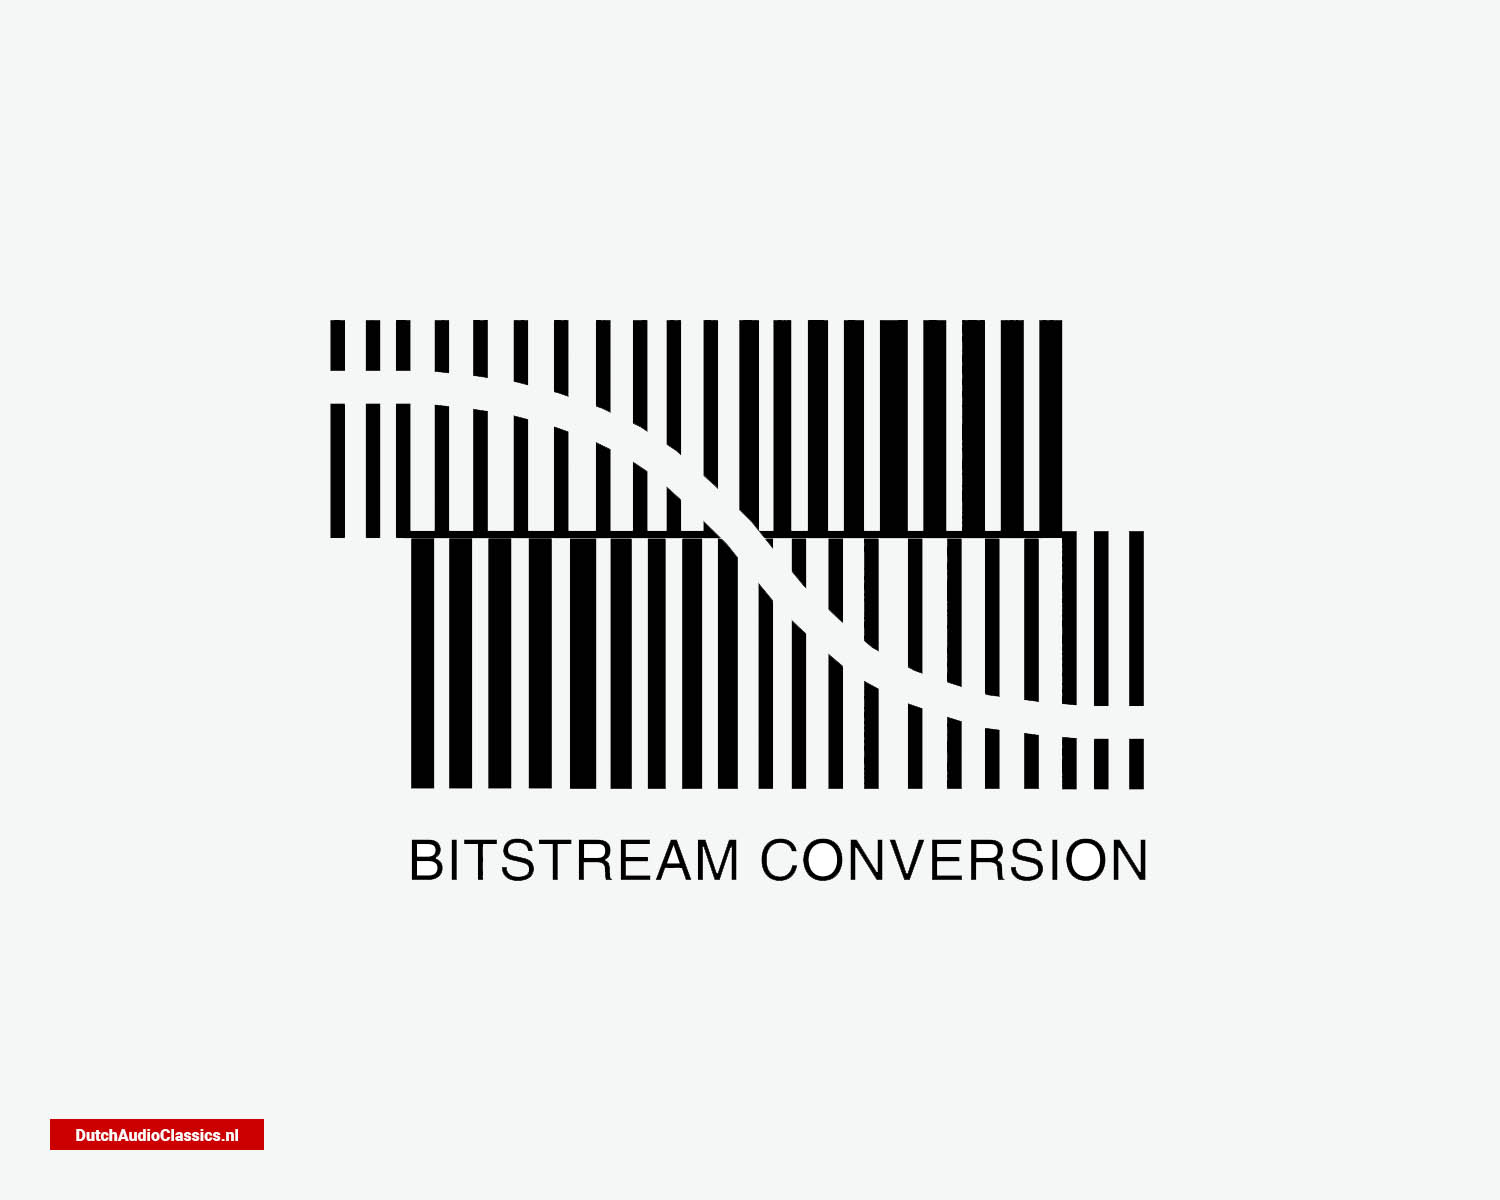 Philips Bitstream Conversion